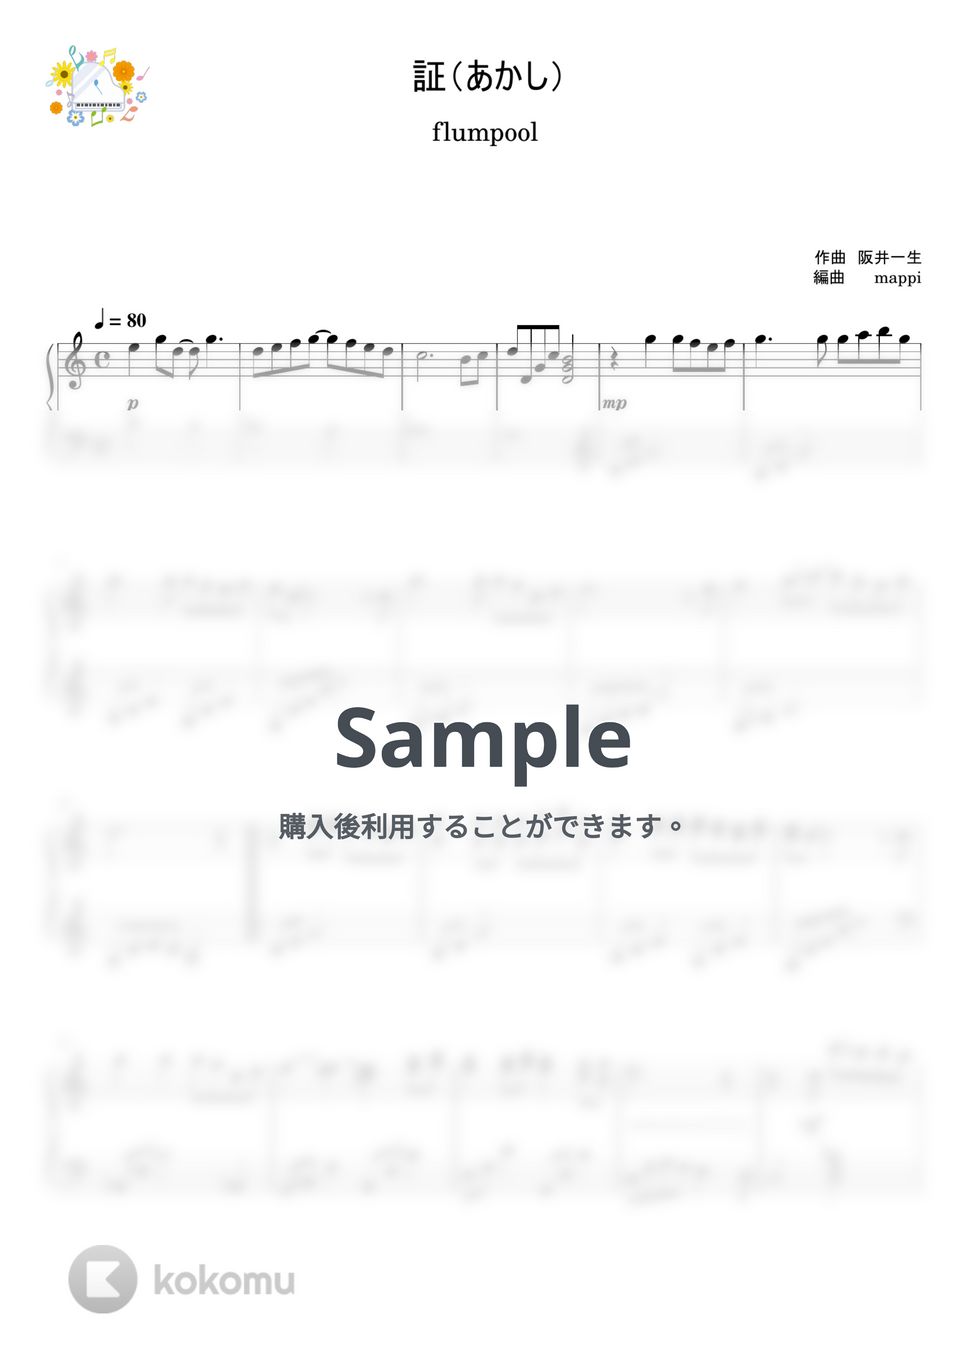 flumpool - 証（あかし） (私にも弾ける/卒業ソング/シンプルアレンジ) by pup-mappi